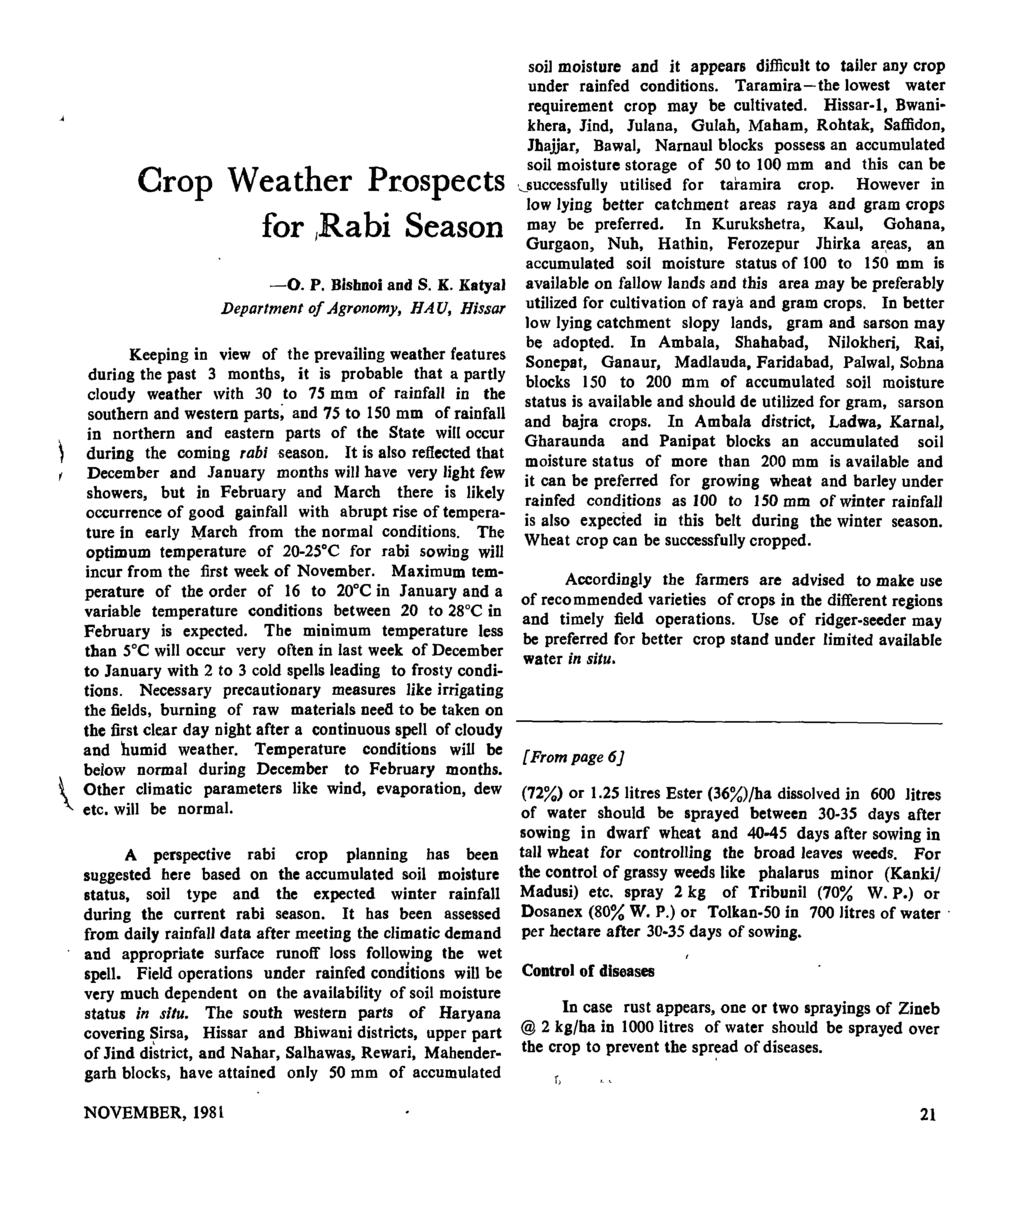 Crop Weather Prospects for JRabi Season -0. P. Bisbnoi and S. K.